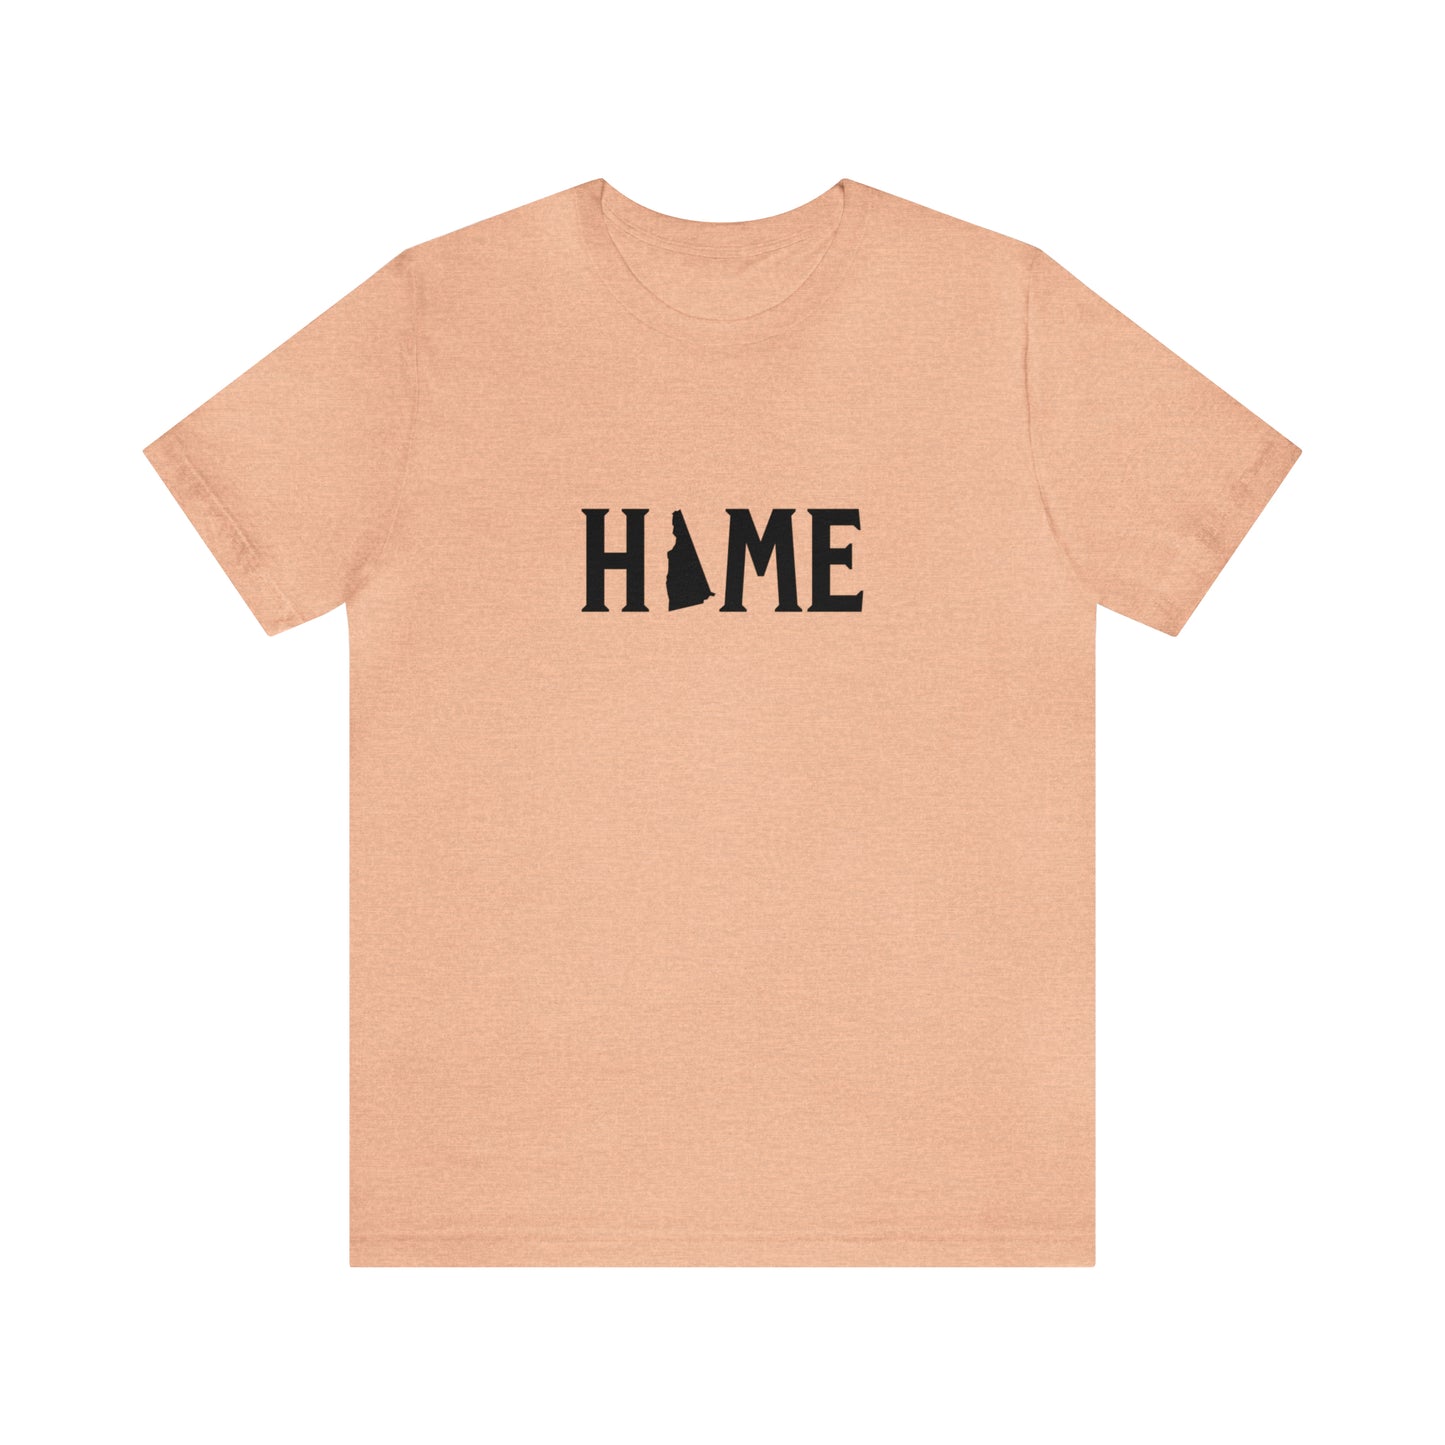 New Hampshire HOME Shirt